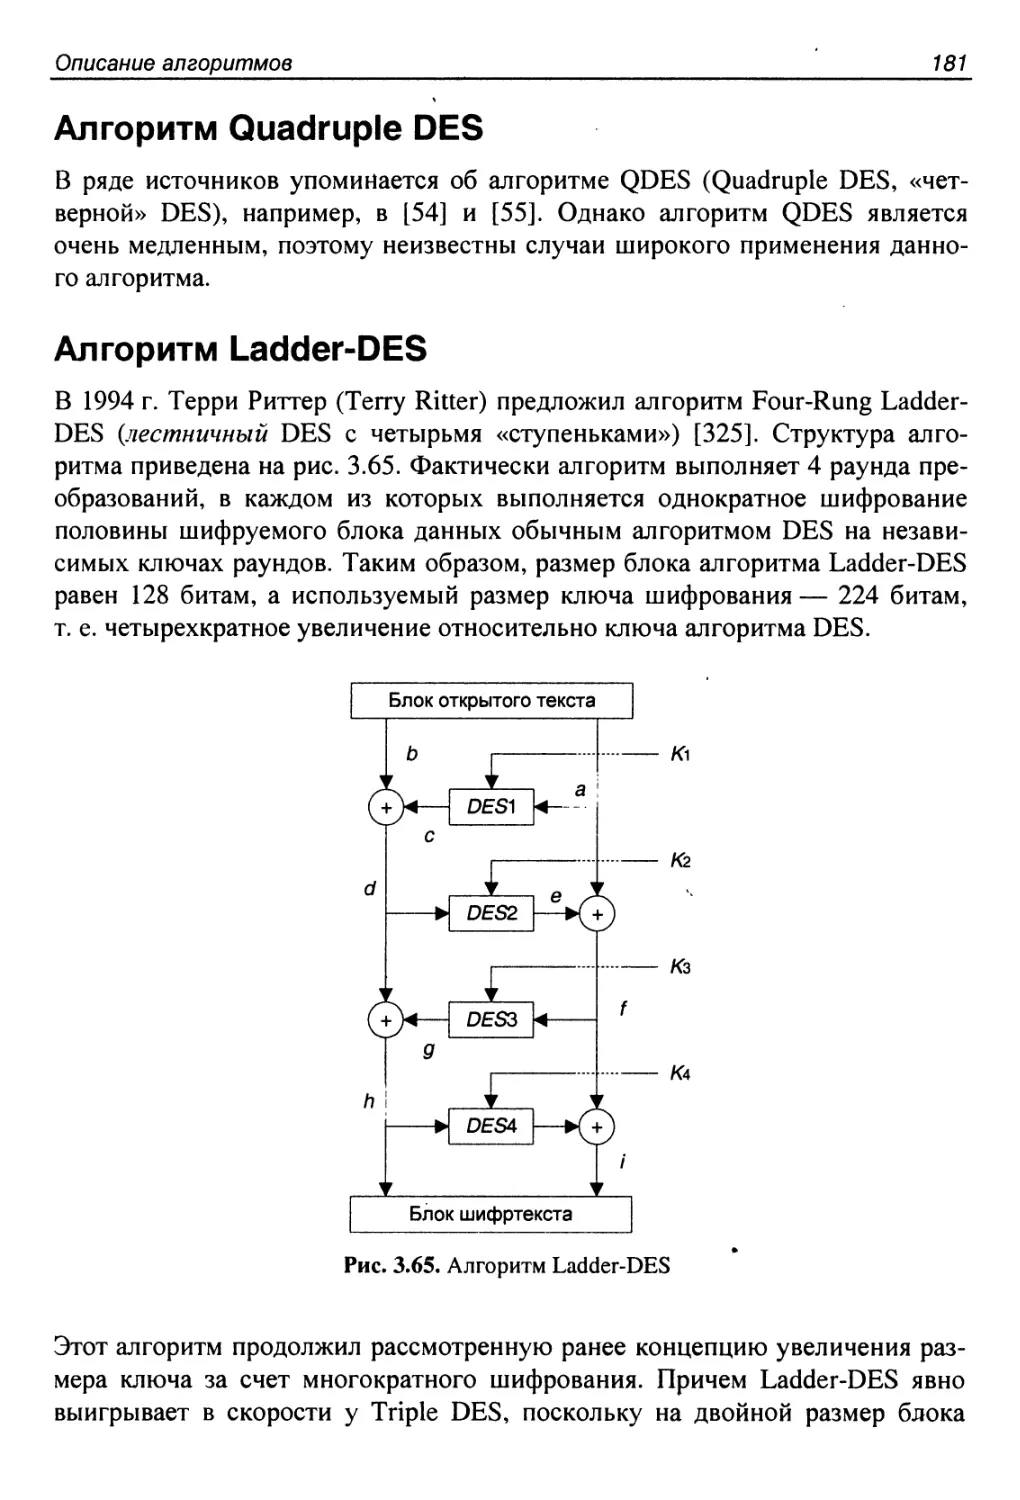 Алгоритм Quadruple DES
Алгоритм Ladder-DES